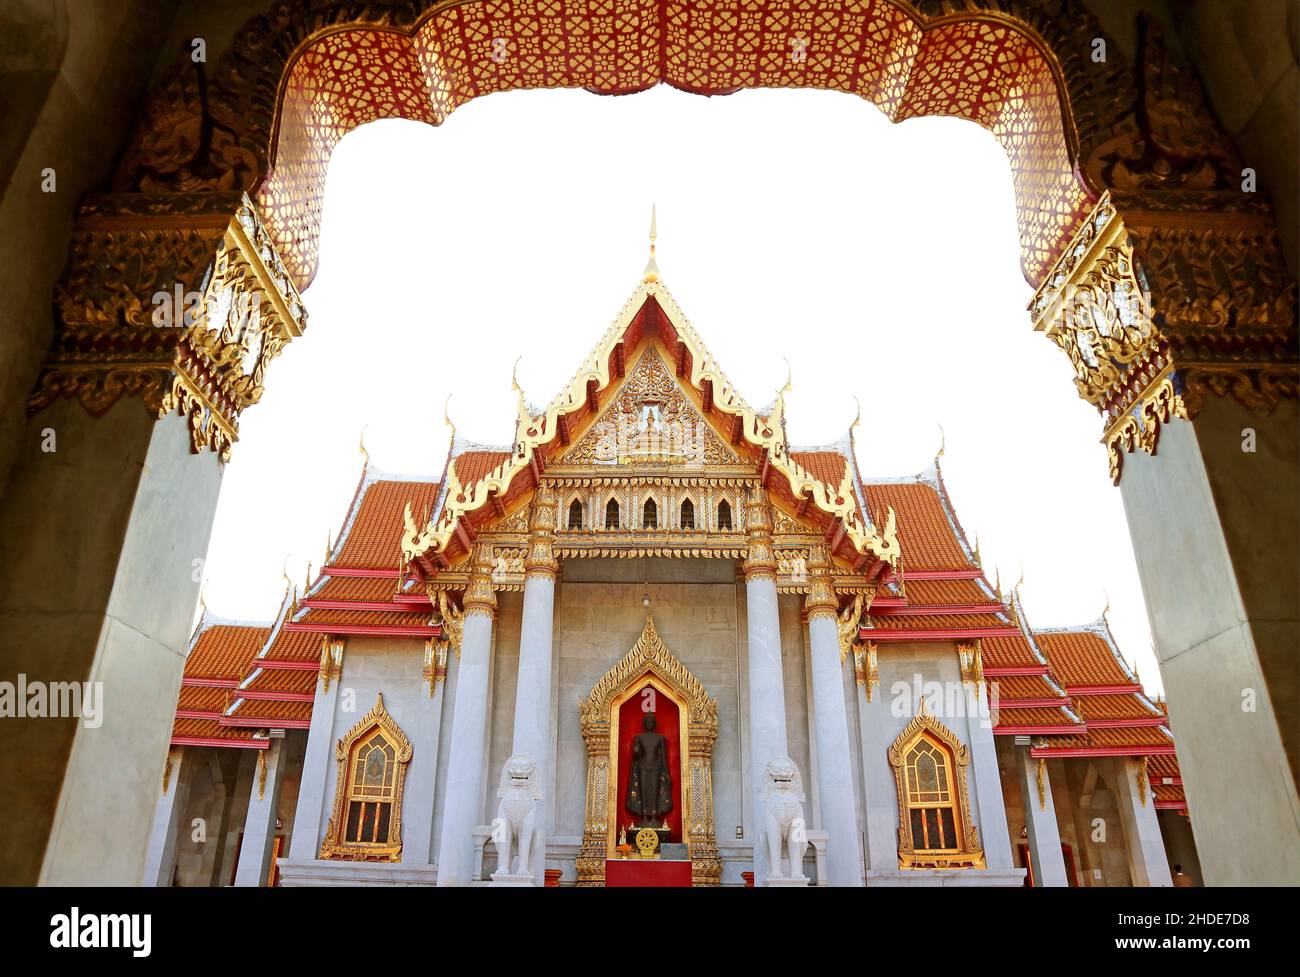 Stunning Ordination Hall of Wat Benchamabophit Dusitvanaram or The Marble Temple, Bangkok, Thailand Stock Photo